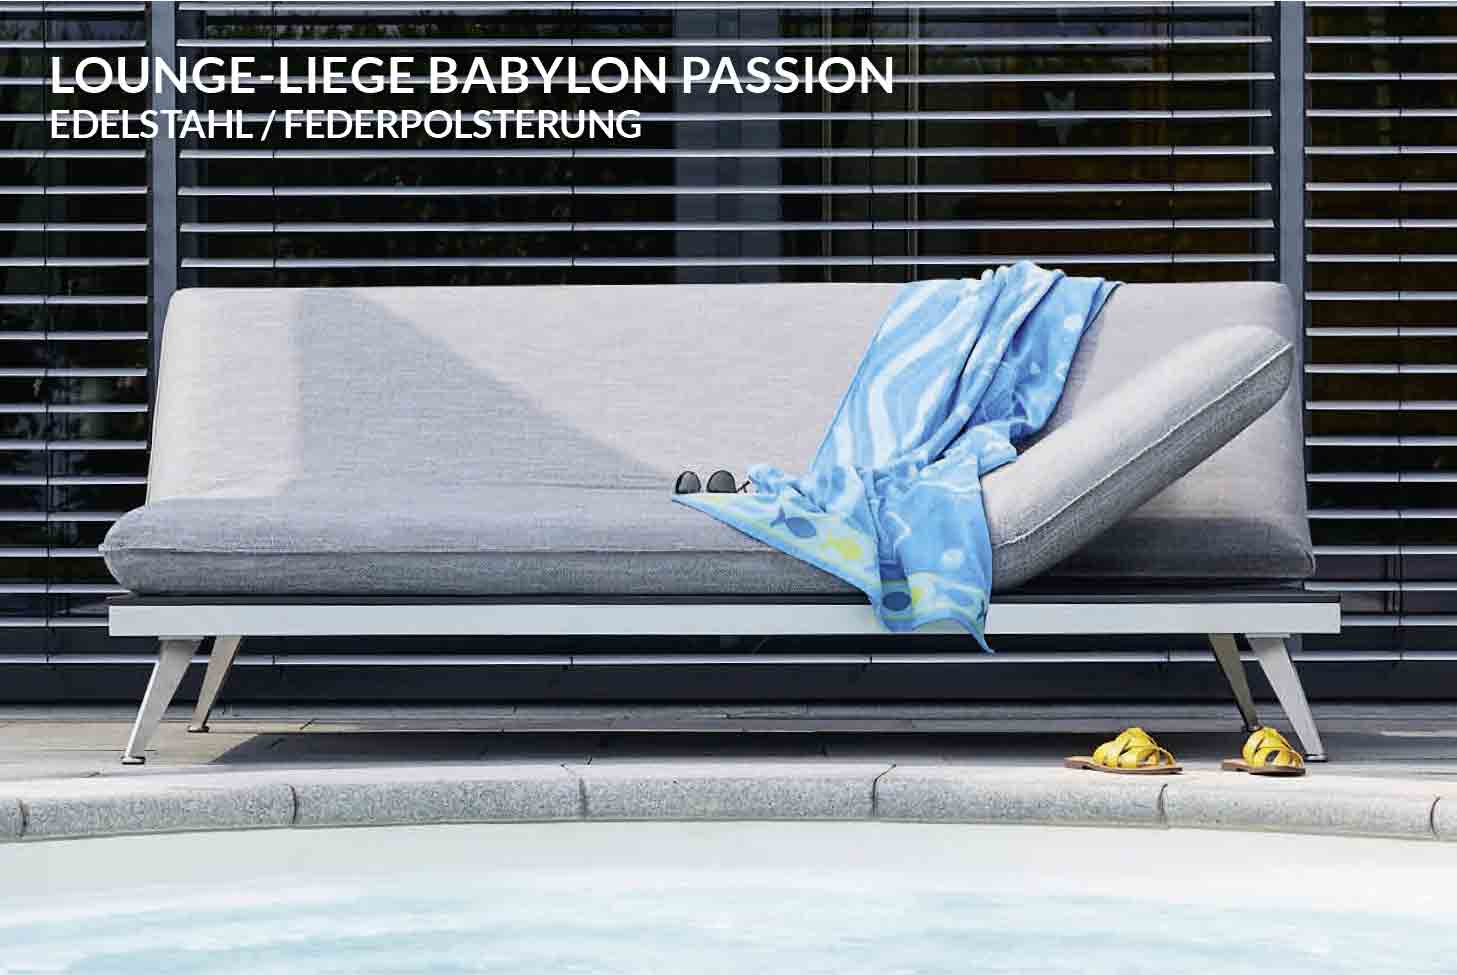 BEYOND Babylon Passion – wandelbare Lounge-Liege